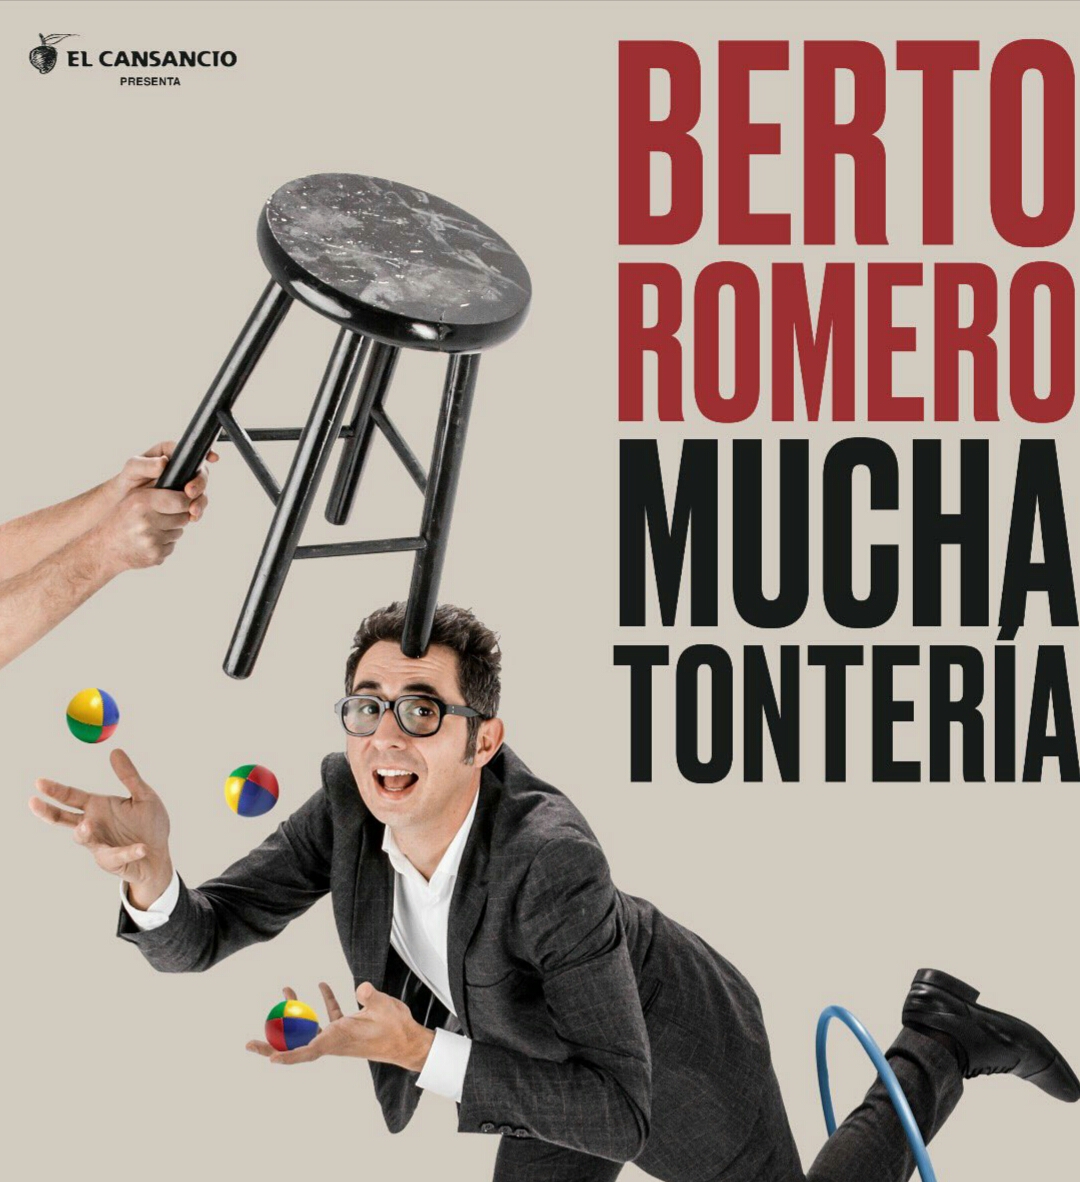 IMAGEN OFICIAL MUCHA TONTERIA BERTO ROMERO